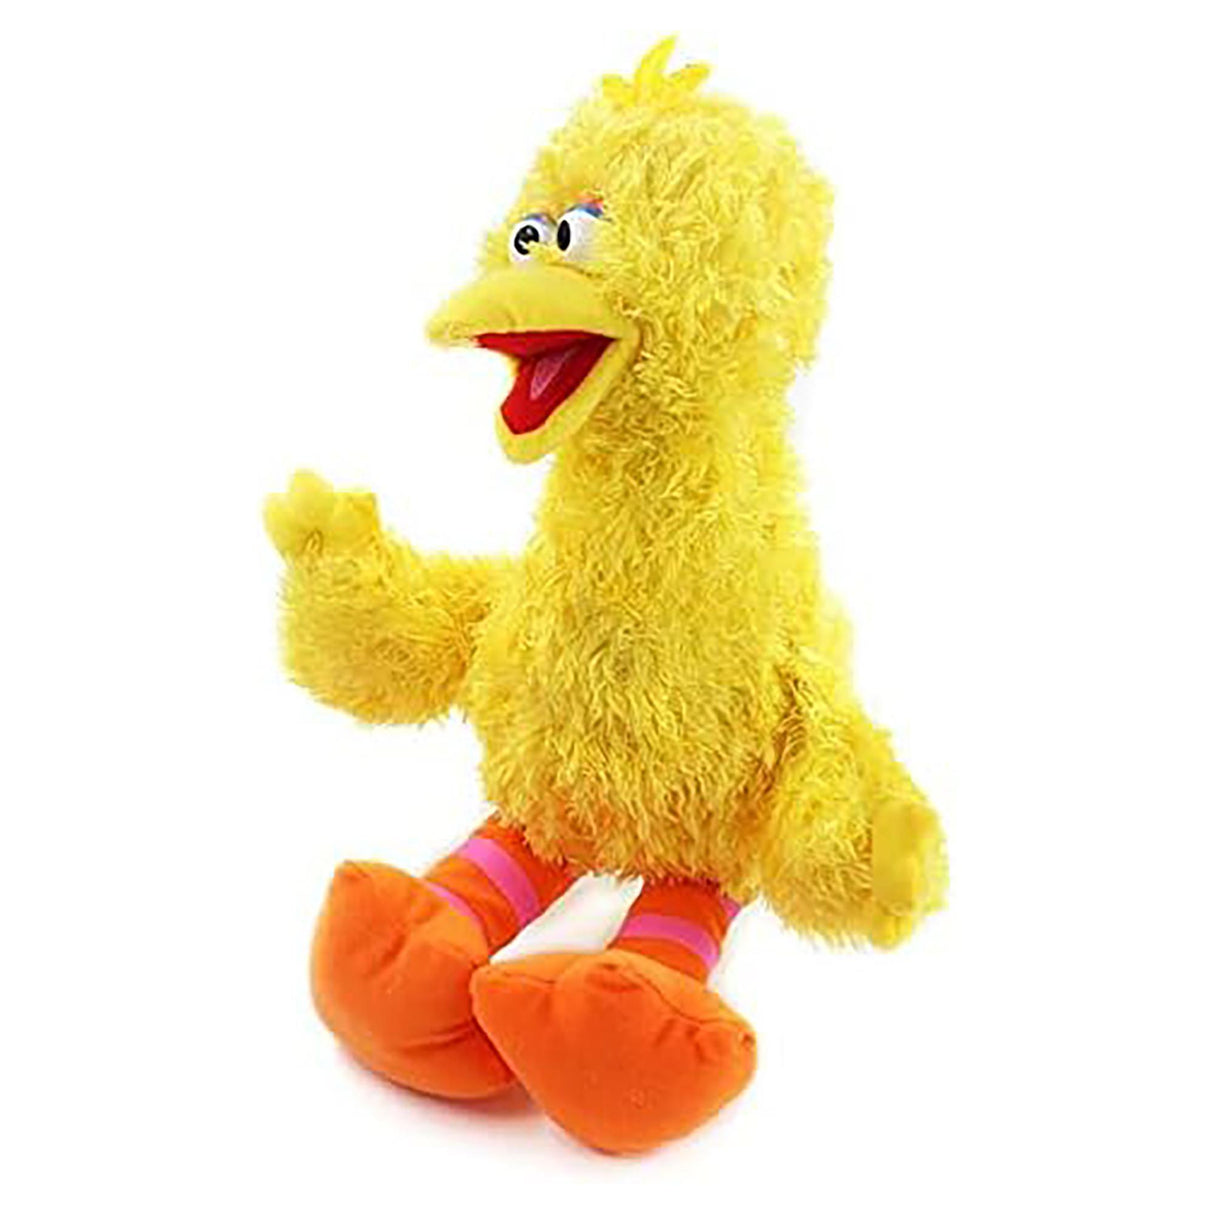 Sesame Street Big Bird Plush